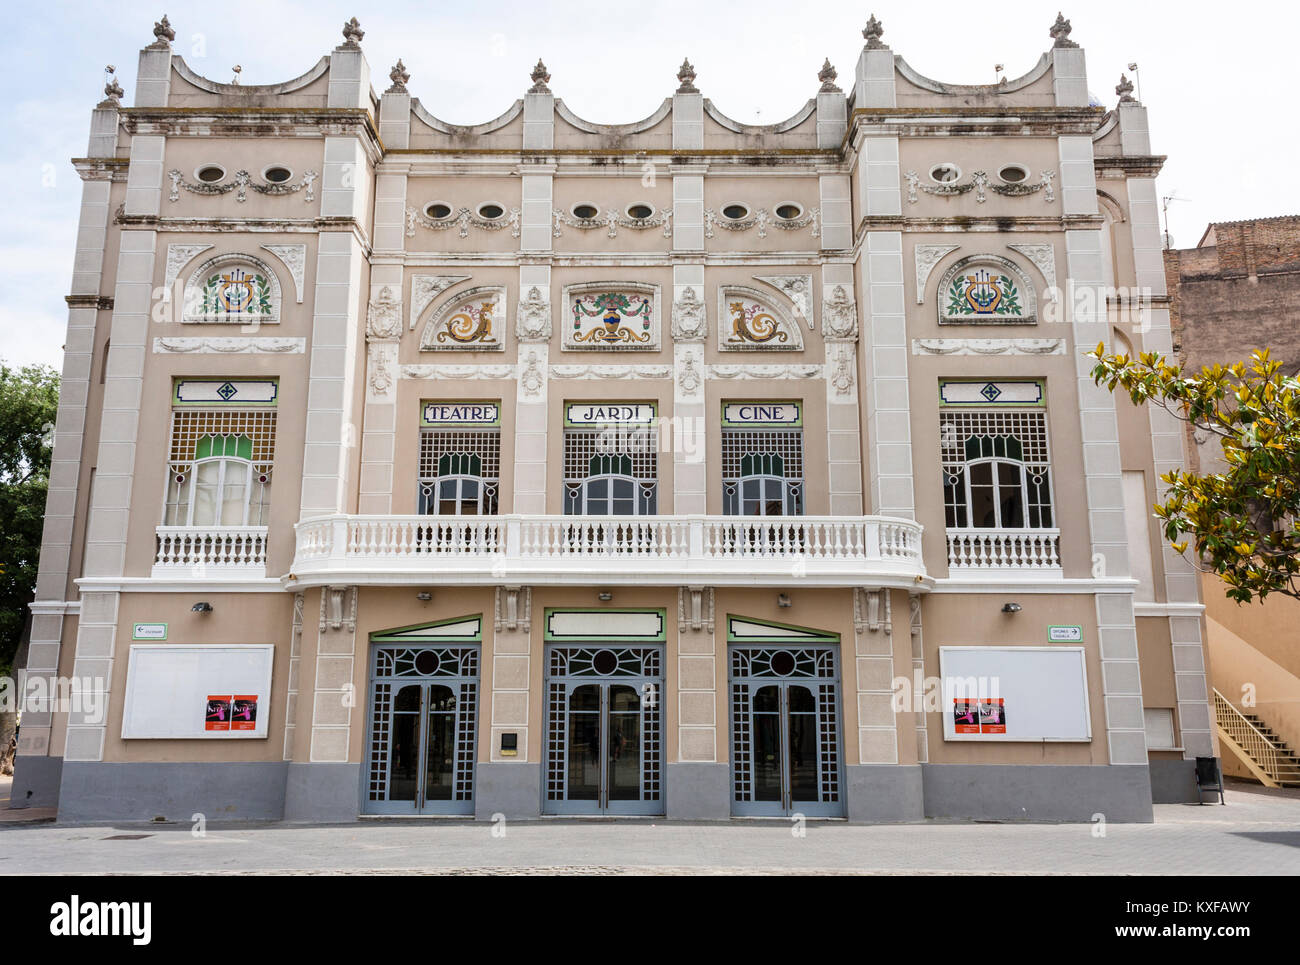 Teatre Jardi cinema designed by architect Llorenç Ros i Costa in Figueres, Spain, Europe Stock Photo